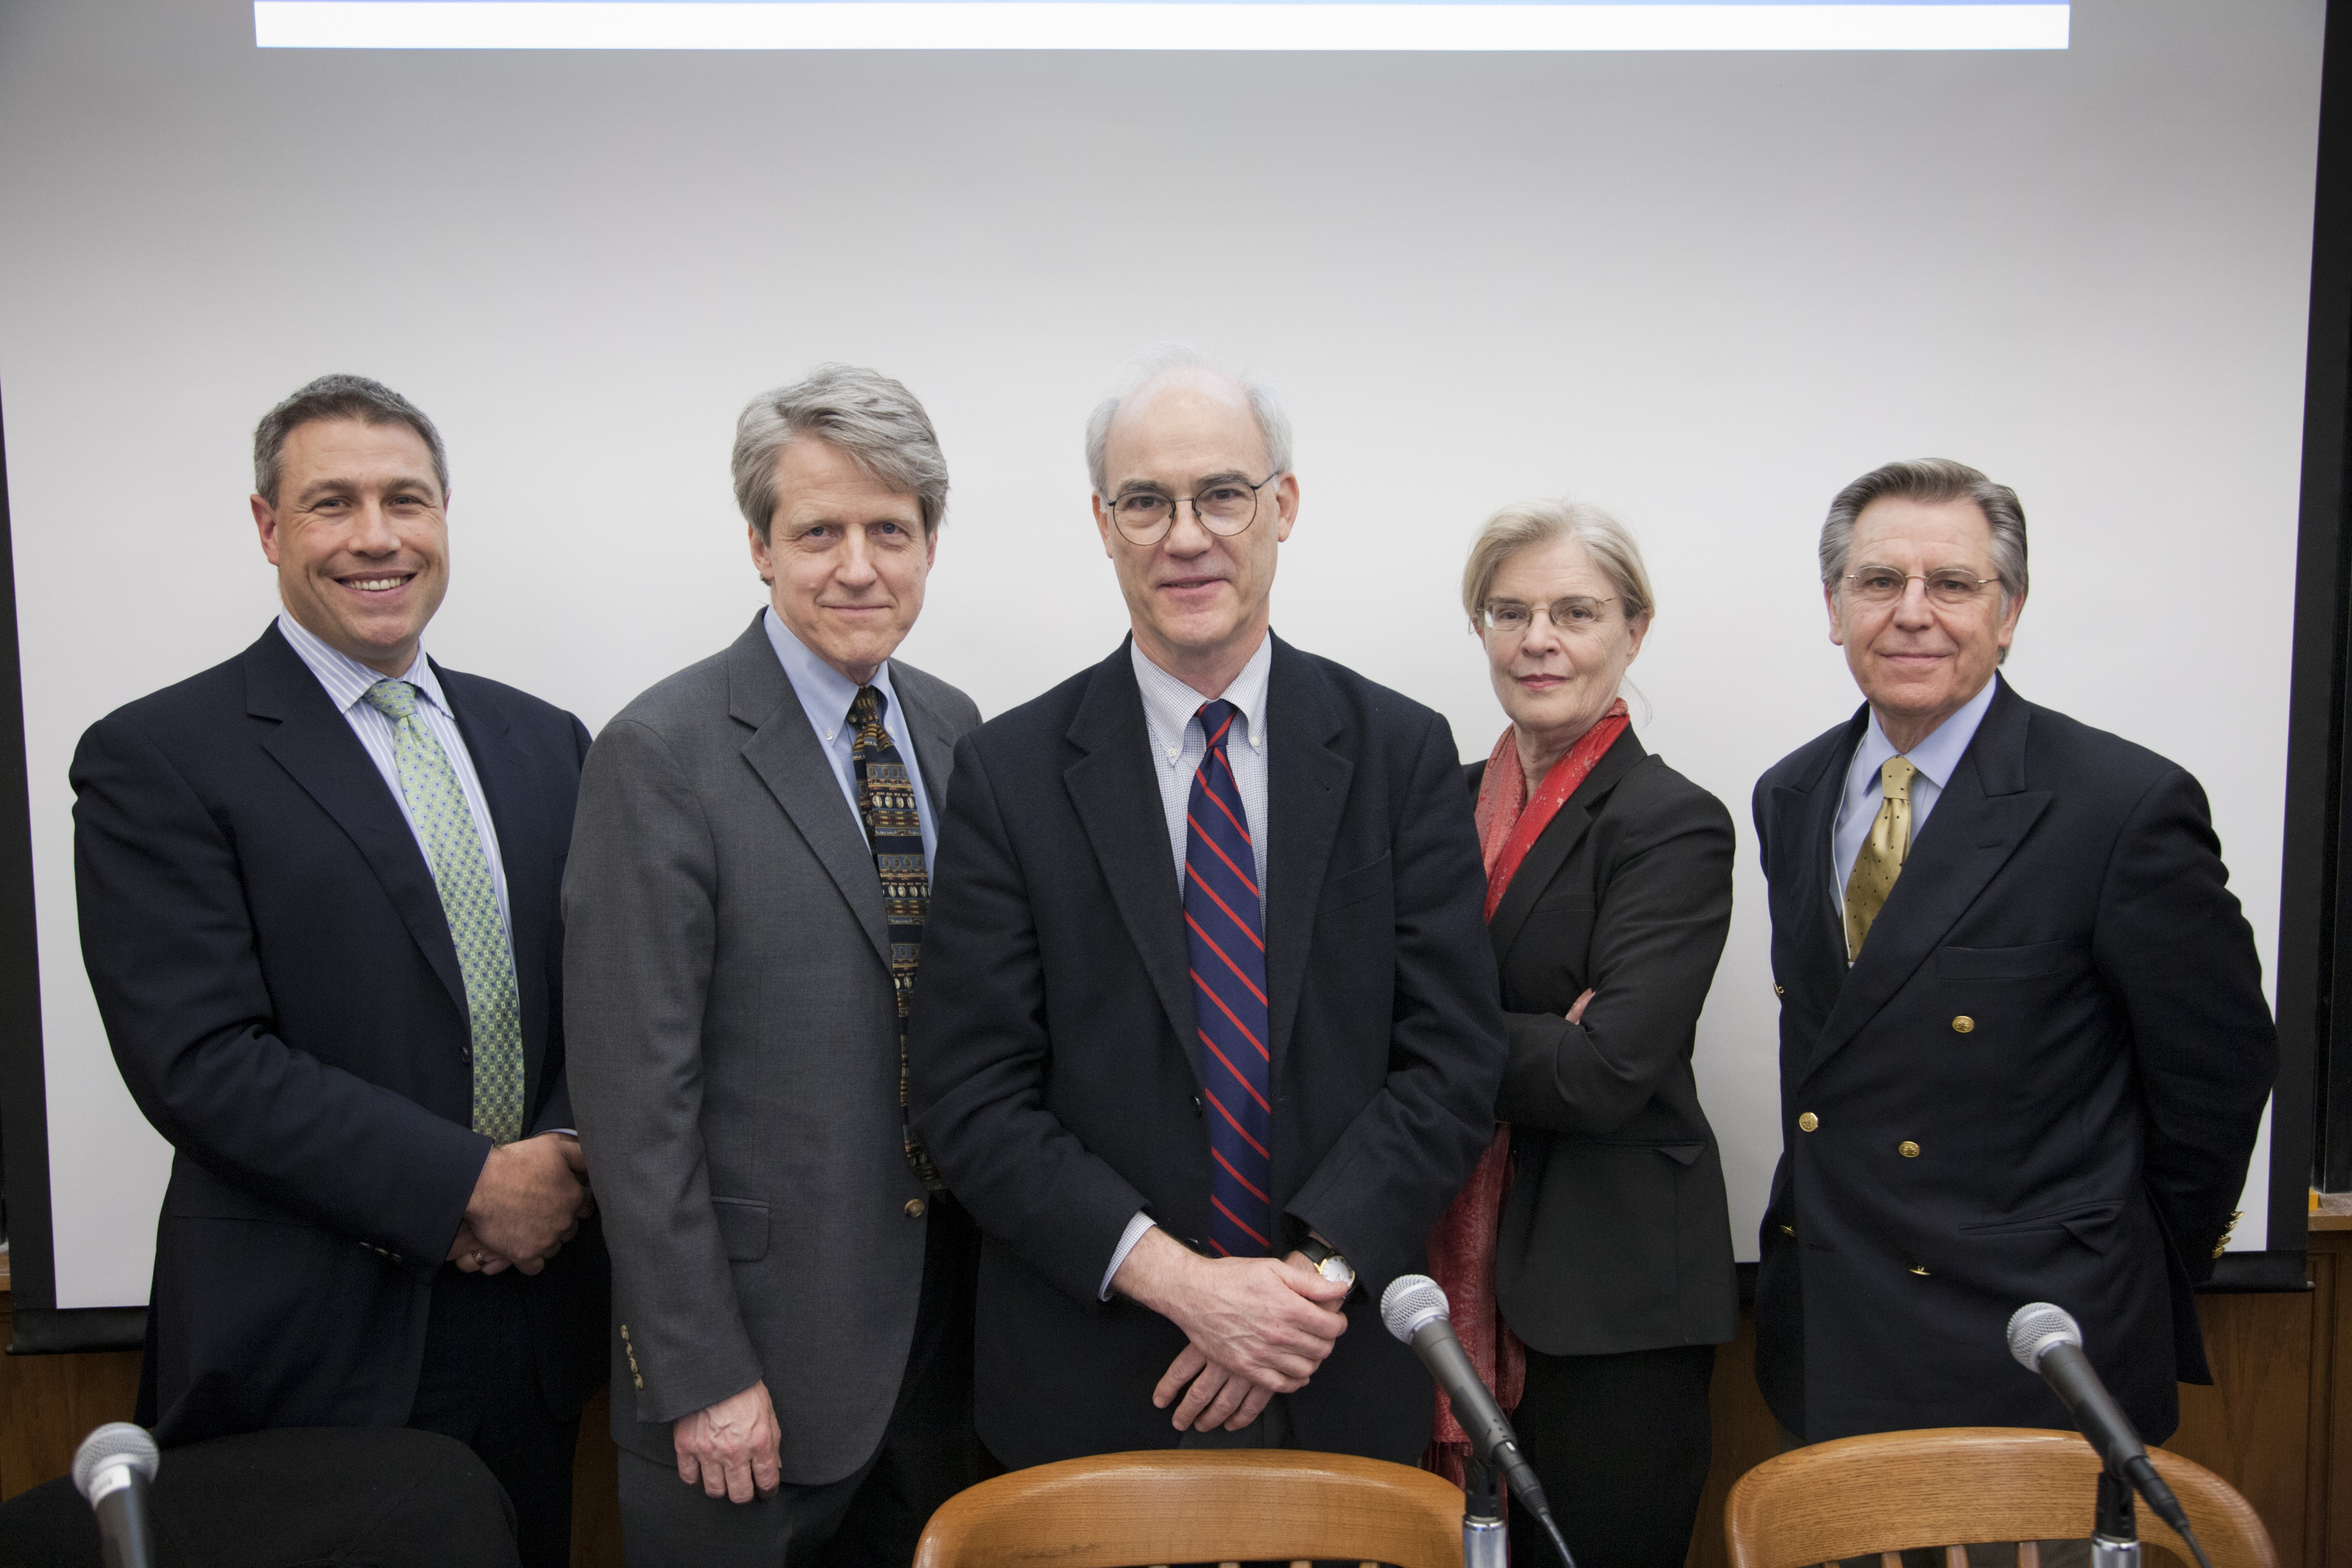 Columbia Business Prof. Christopher Mayer, Yale Econ. Prof. Robert Shiller, YLS Prof. Robert Ellickson &#039;66, Wharton Prof. Susan Wachter, and Peter Wallison